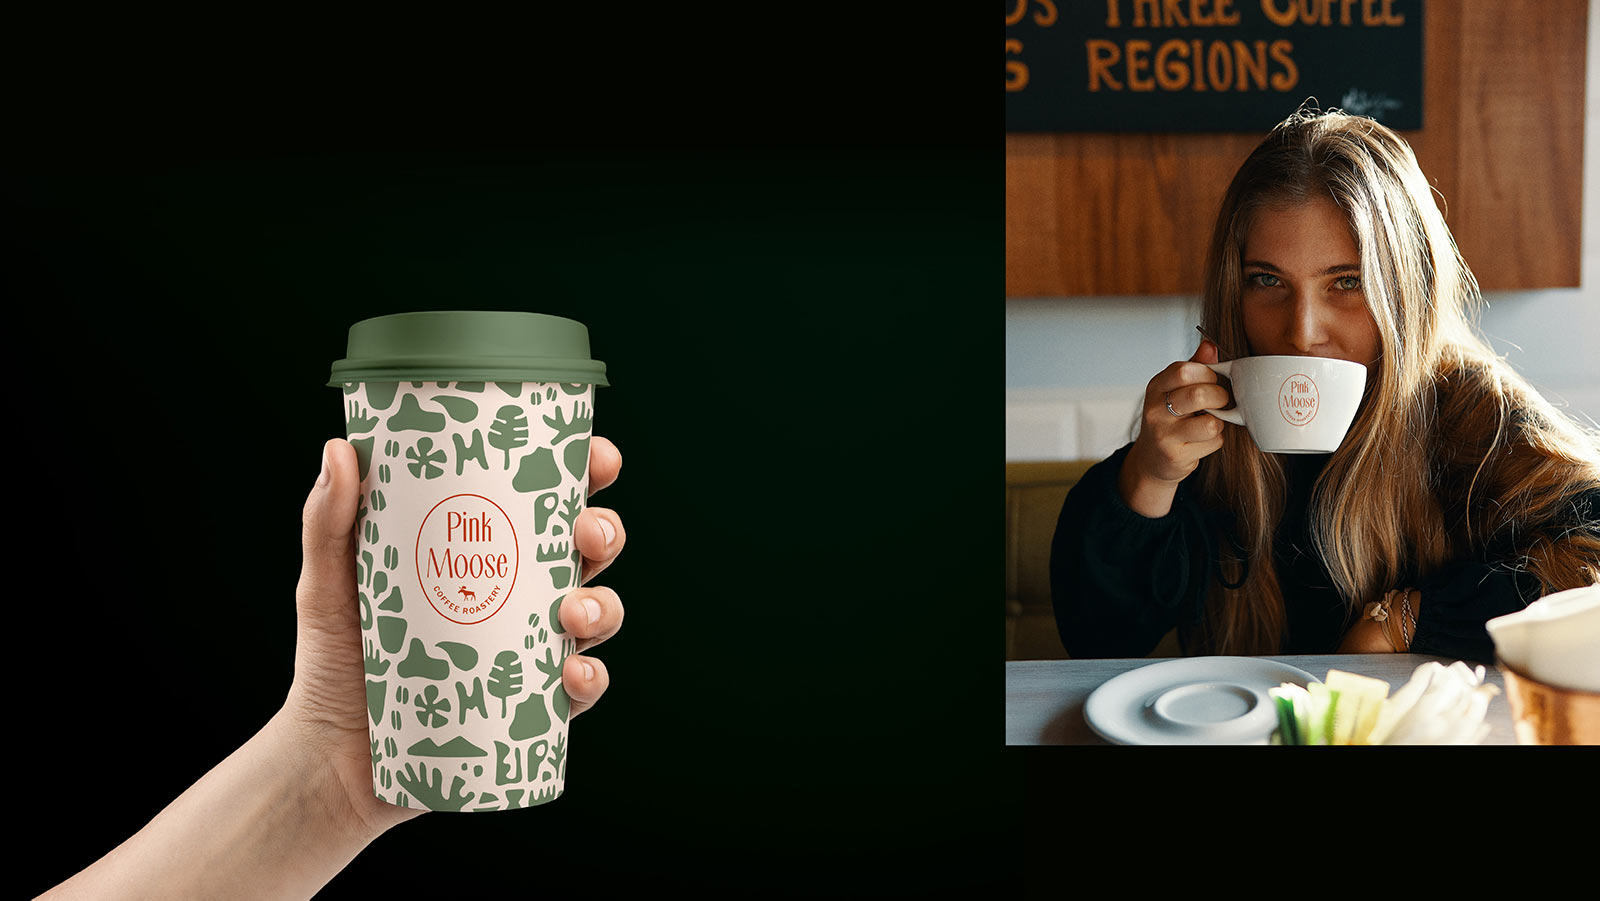 cafe coffee shop branding mockups girl sipping coffee